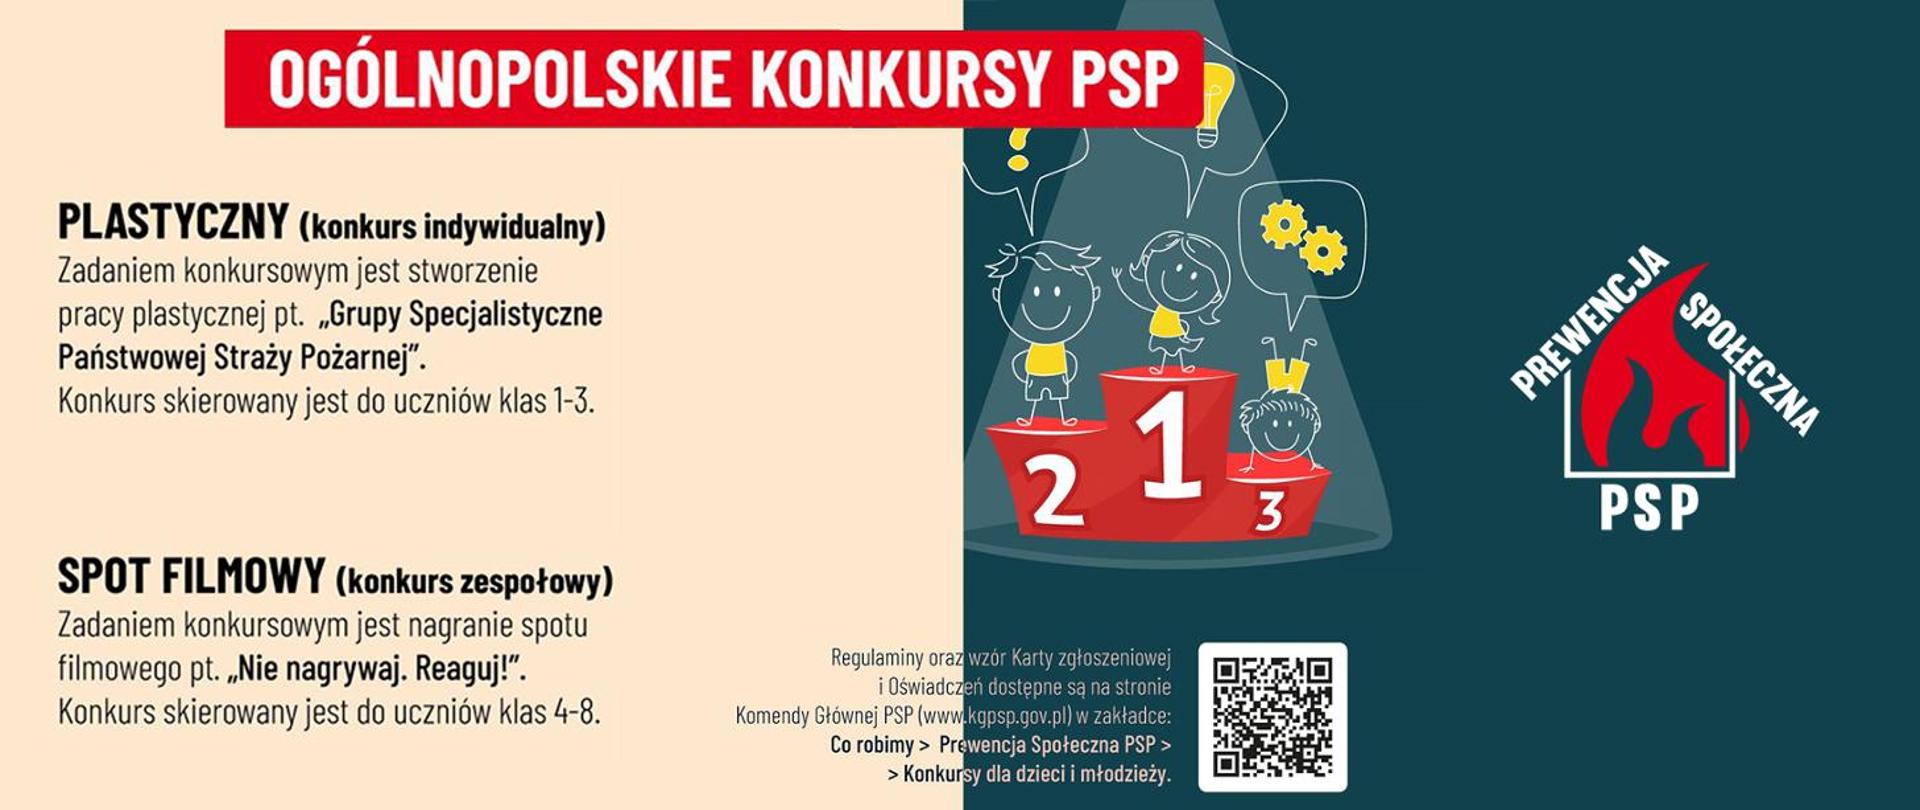 Ogólnopolskie konkursy PSP plakat